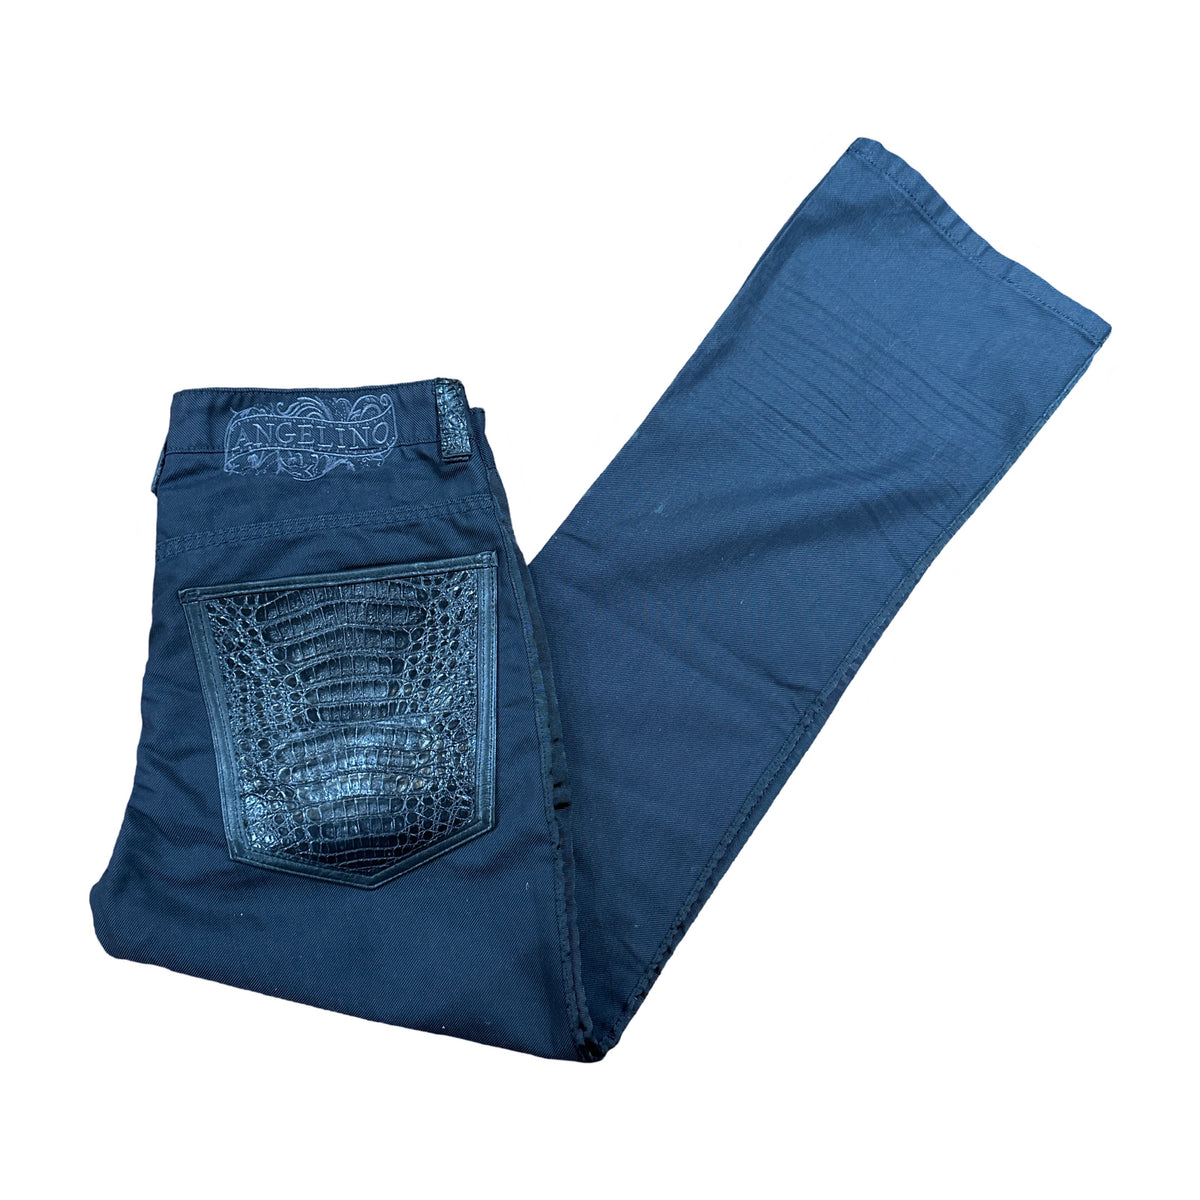 Kashani x Angelino Jeans w/ Black Alligator Pockets